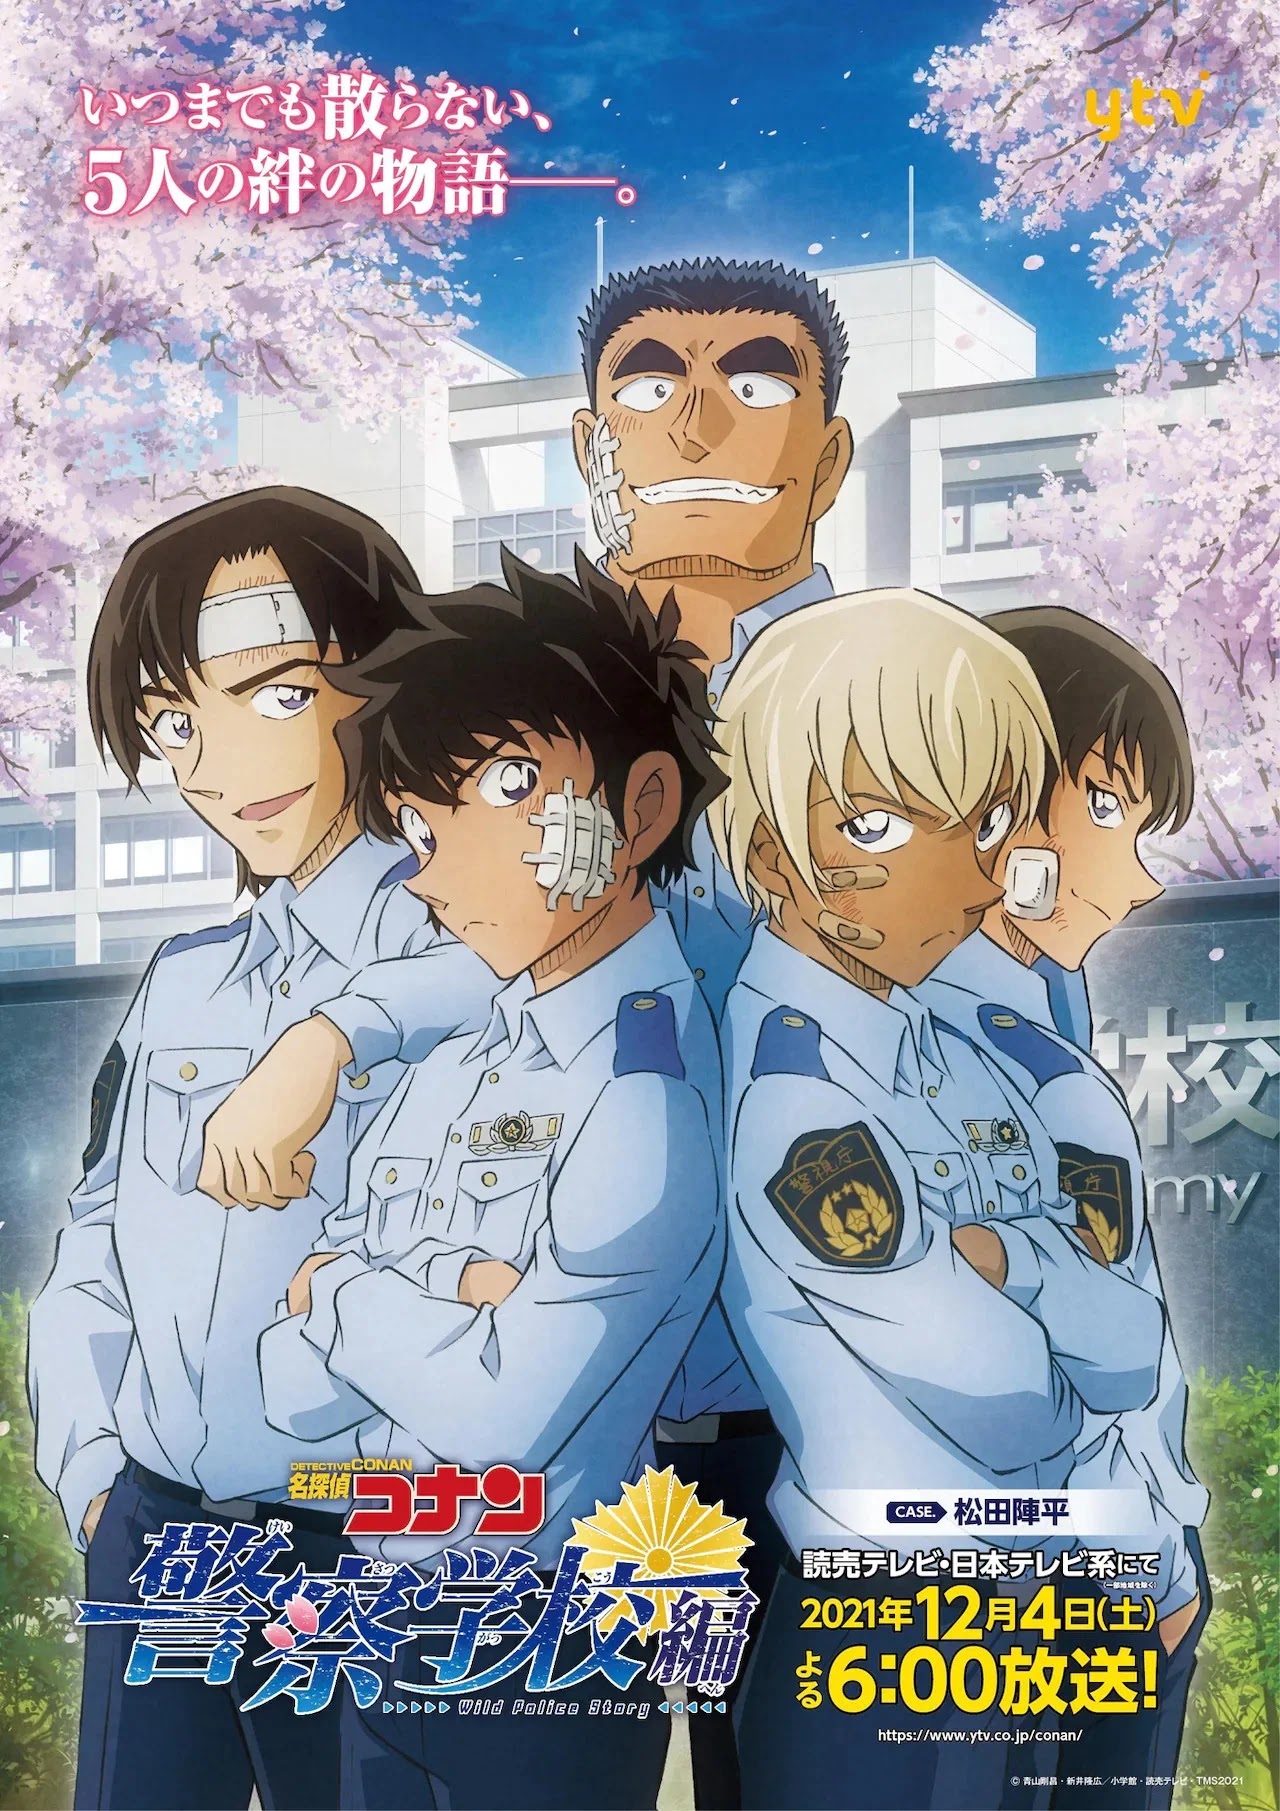 O Anime Detective Conan: Keisatsu Gakkou-hen – Wild Police Story revelou seu primeiro Visual